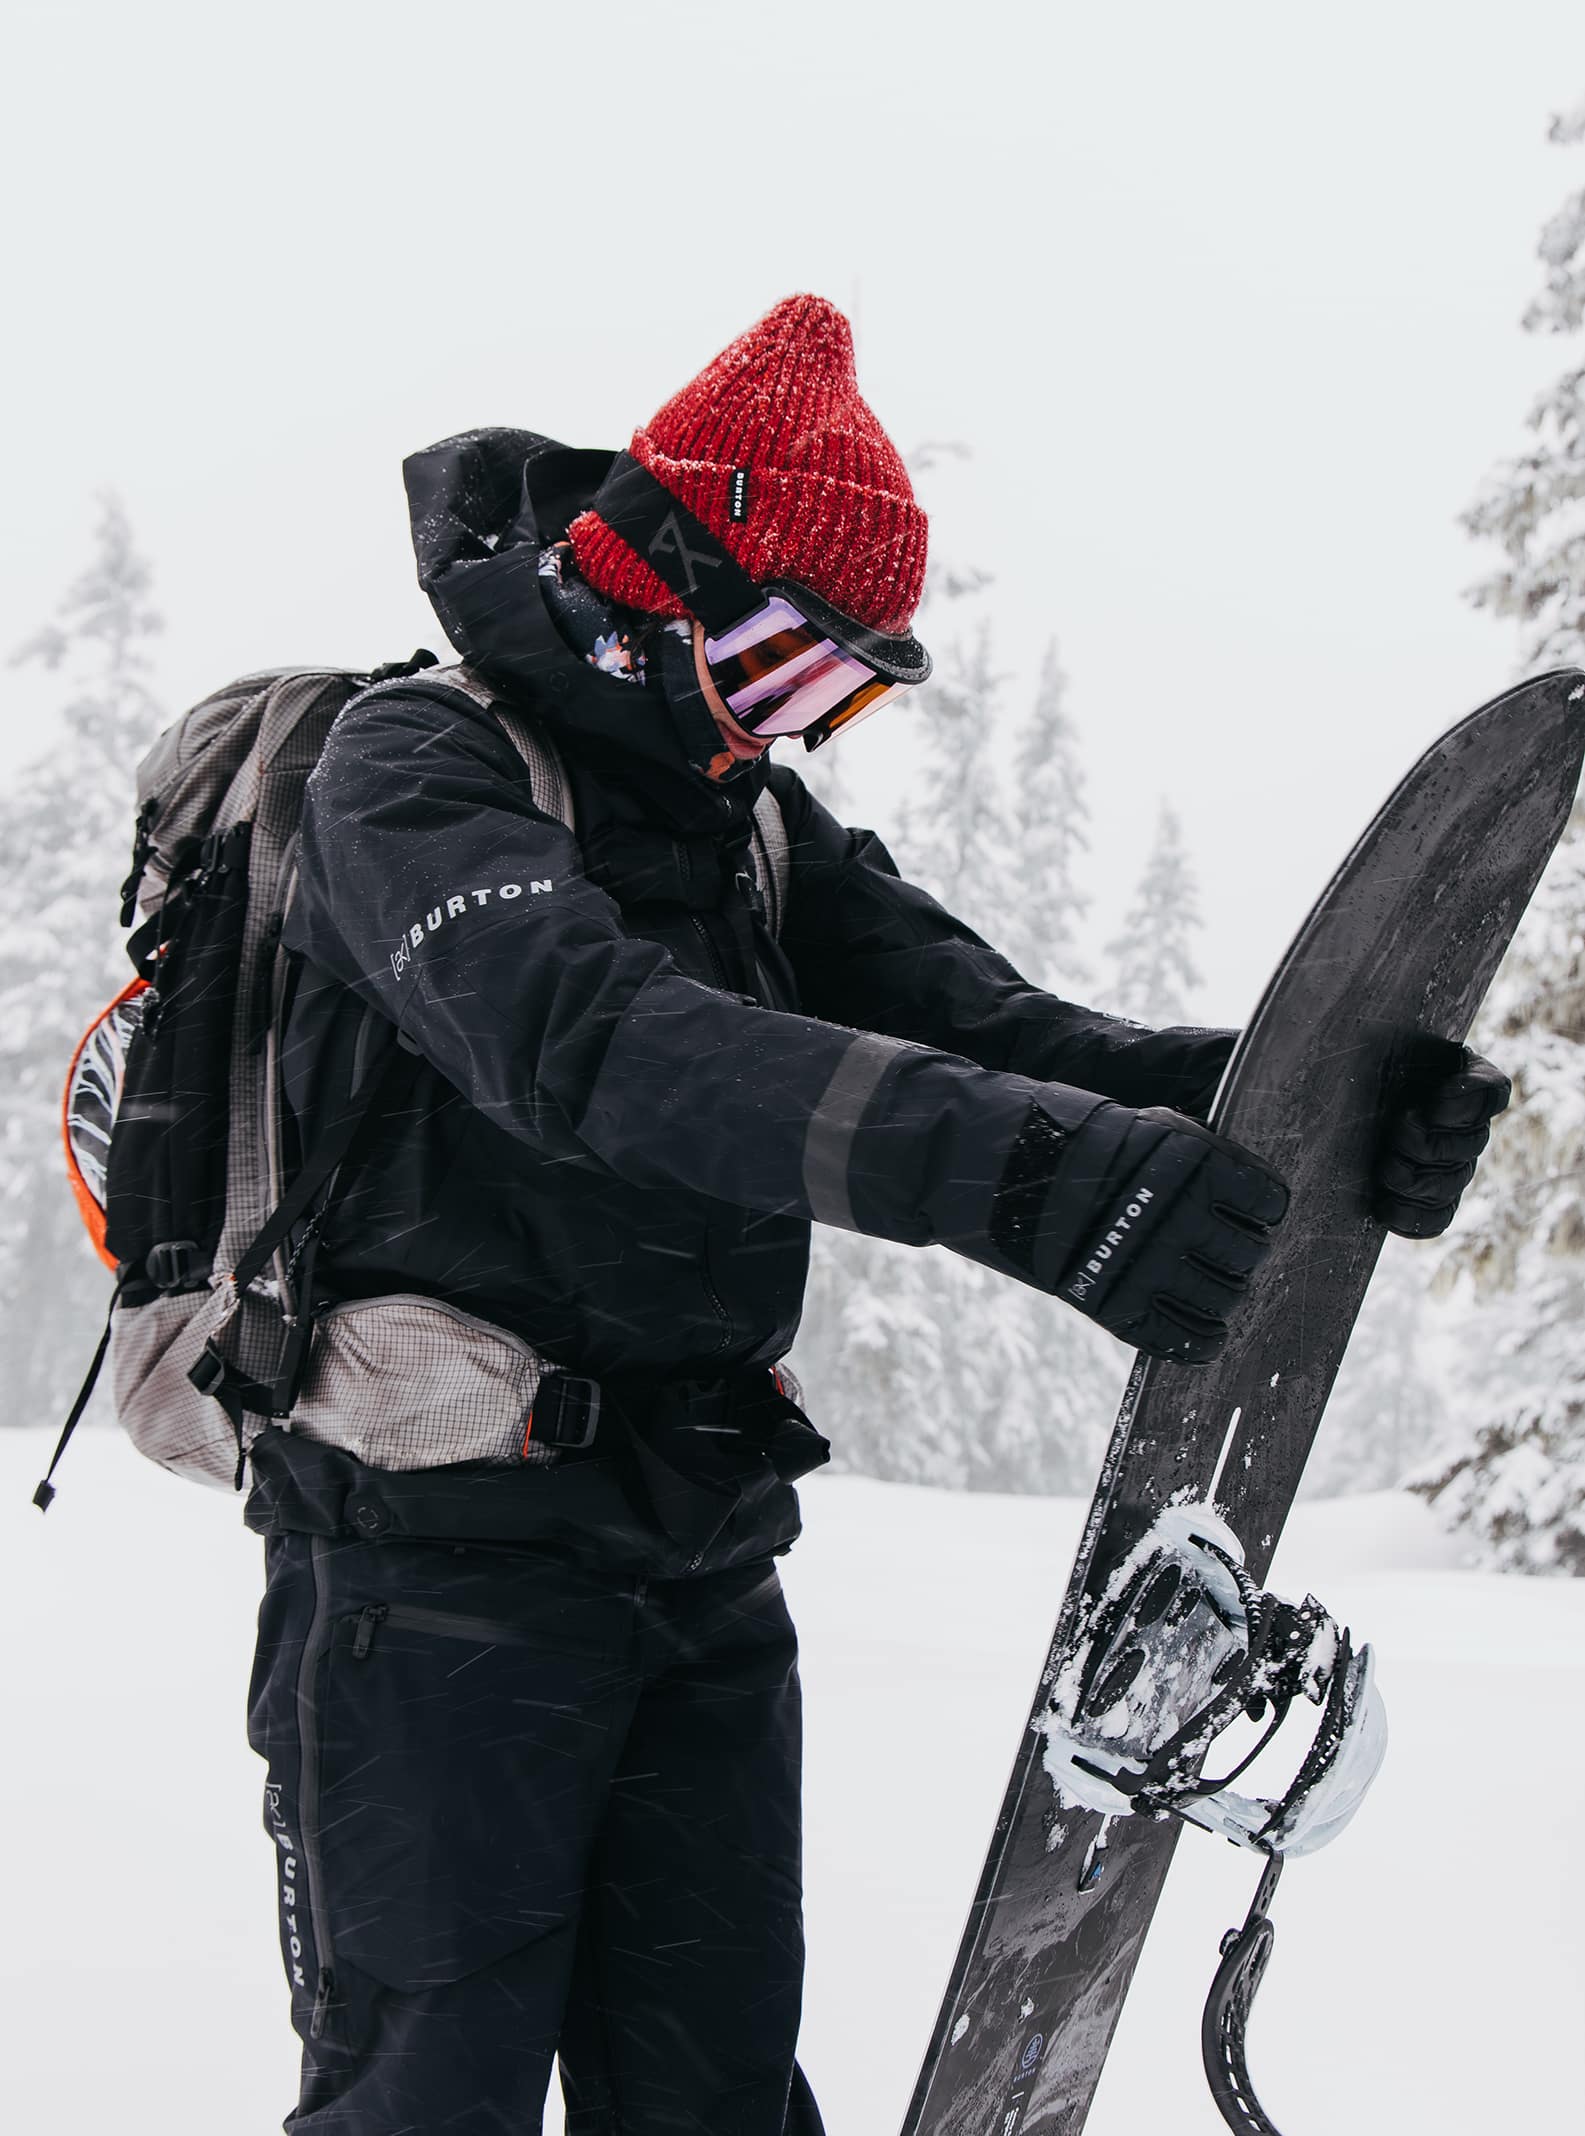 Burton GORE-TEX PRO Gear for Men & Women ​| Jackets & Pants | Burton  Snowboards US